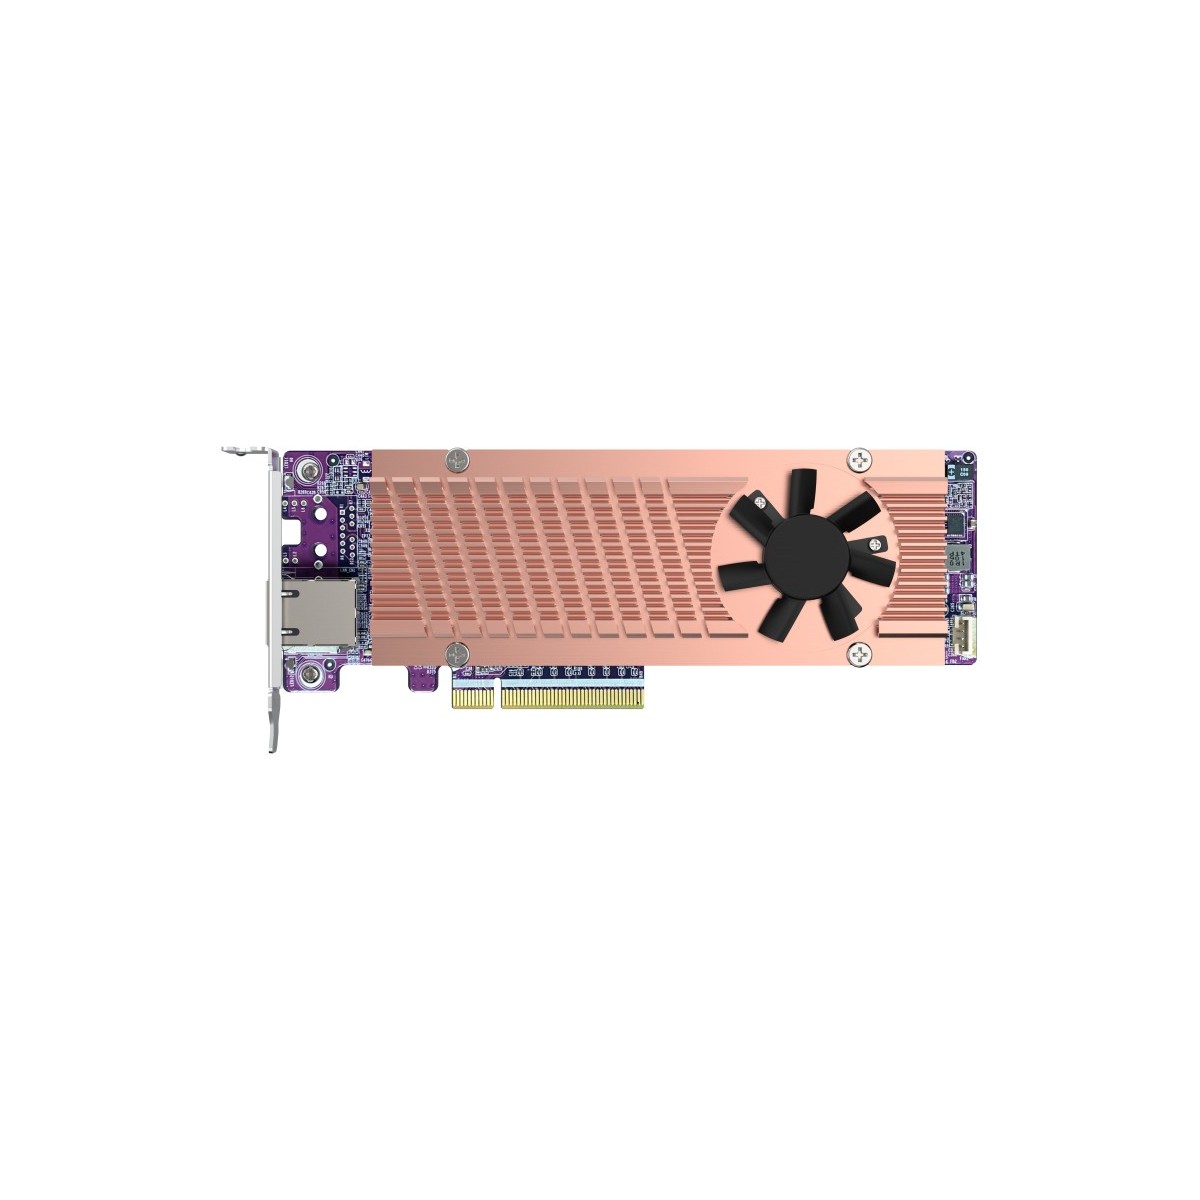 QNAP Card QM2 series 2xPCIe 2280 M.2 SSD slots PCIe Gen4x8 1xAQC113C 10GbE NBASE-T